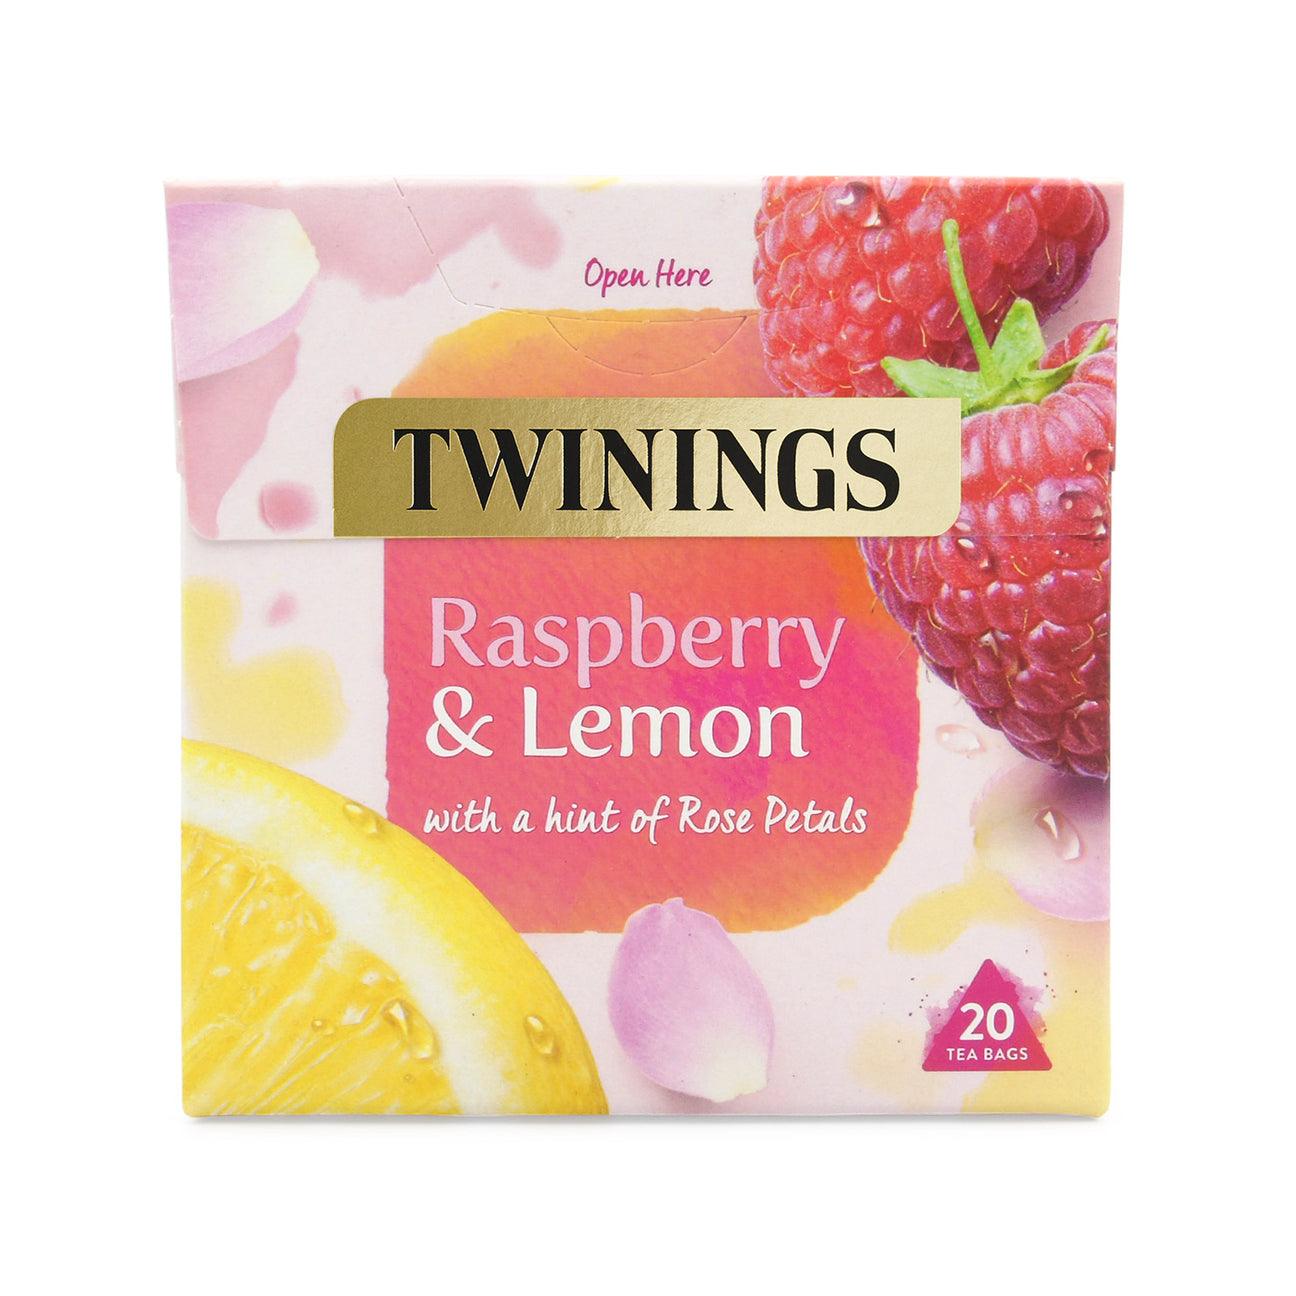 Twinings - Raspberry & Lemon Tea Bags (Non Enveloped) Pack of 20 Tea Bags - Vending Superstore